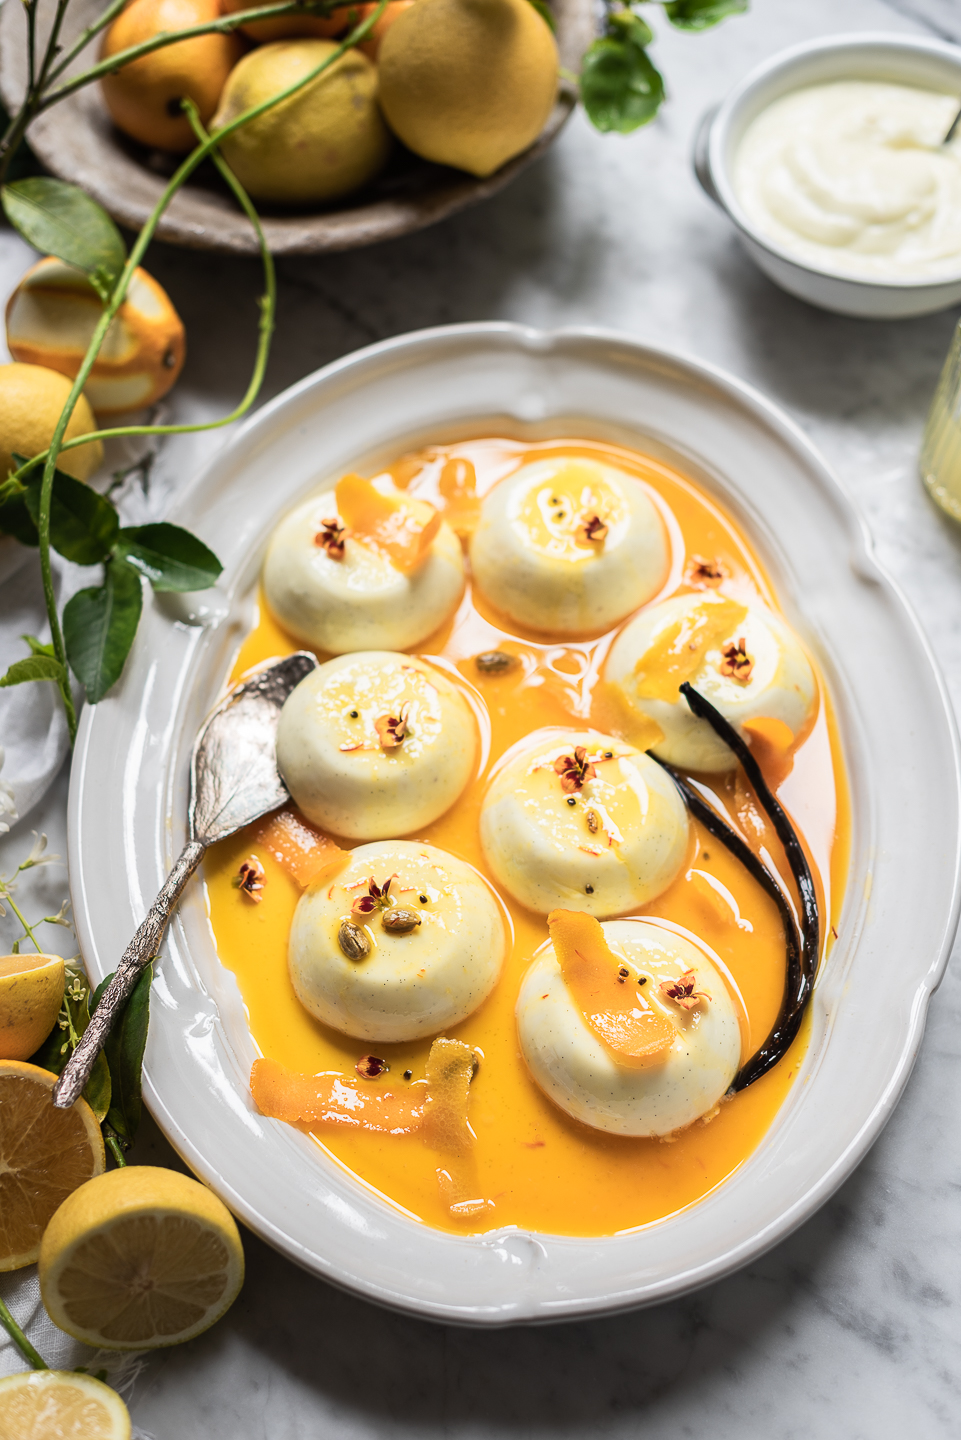 Lemon Cheesecake Pannacotta with Saffron Orange Sauce